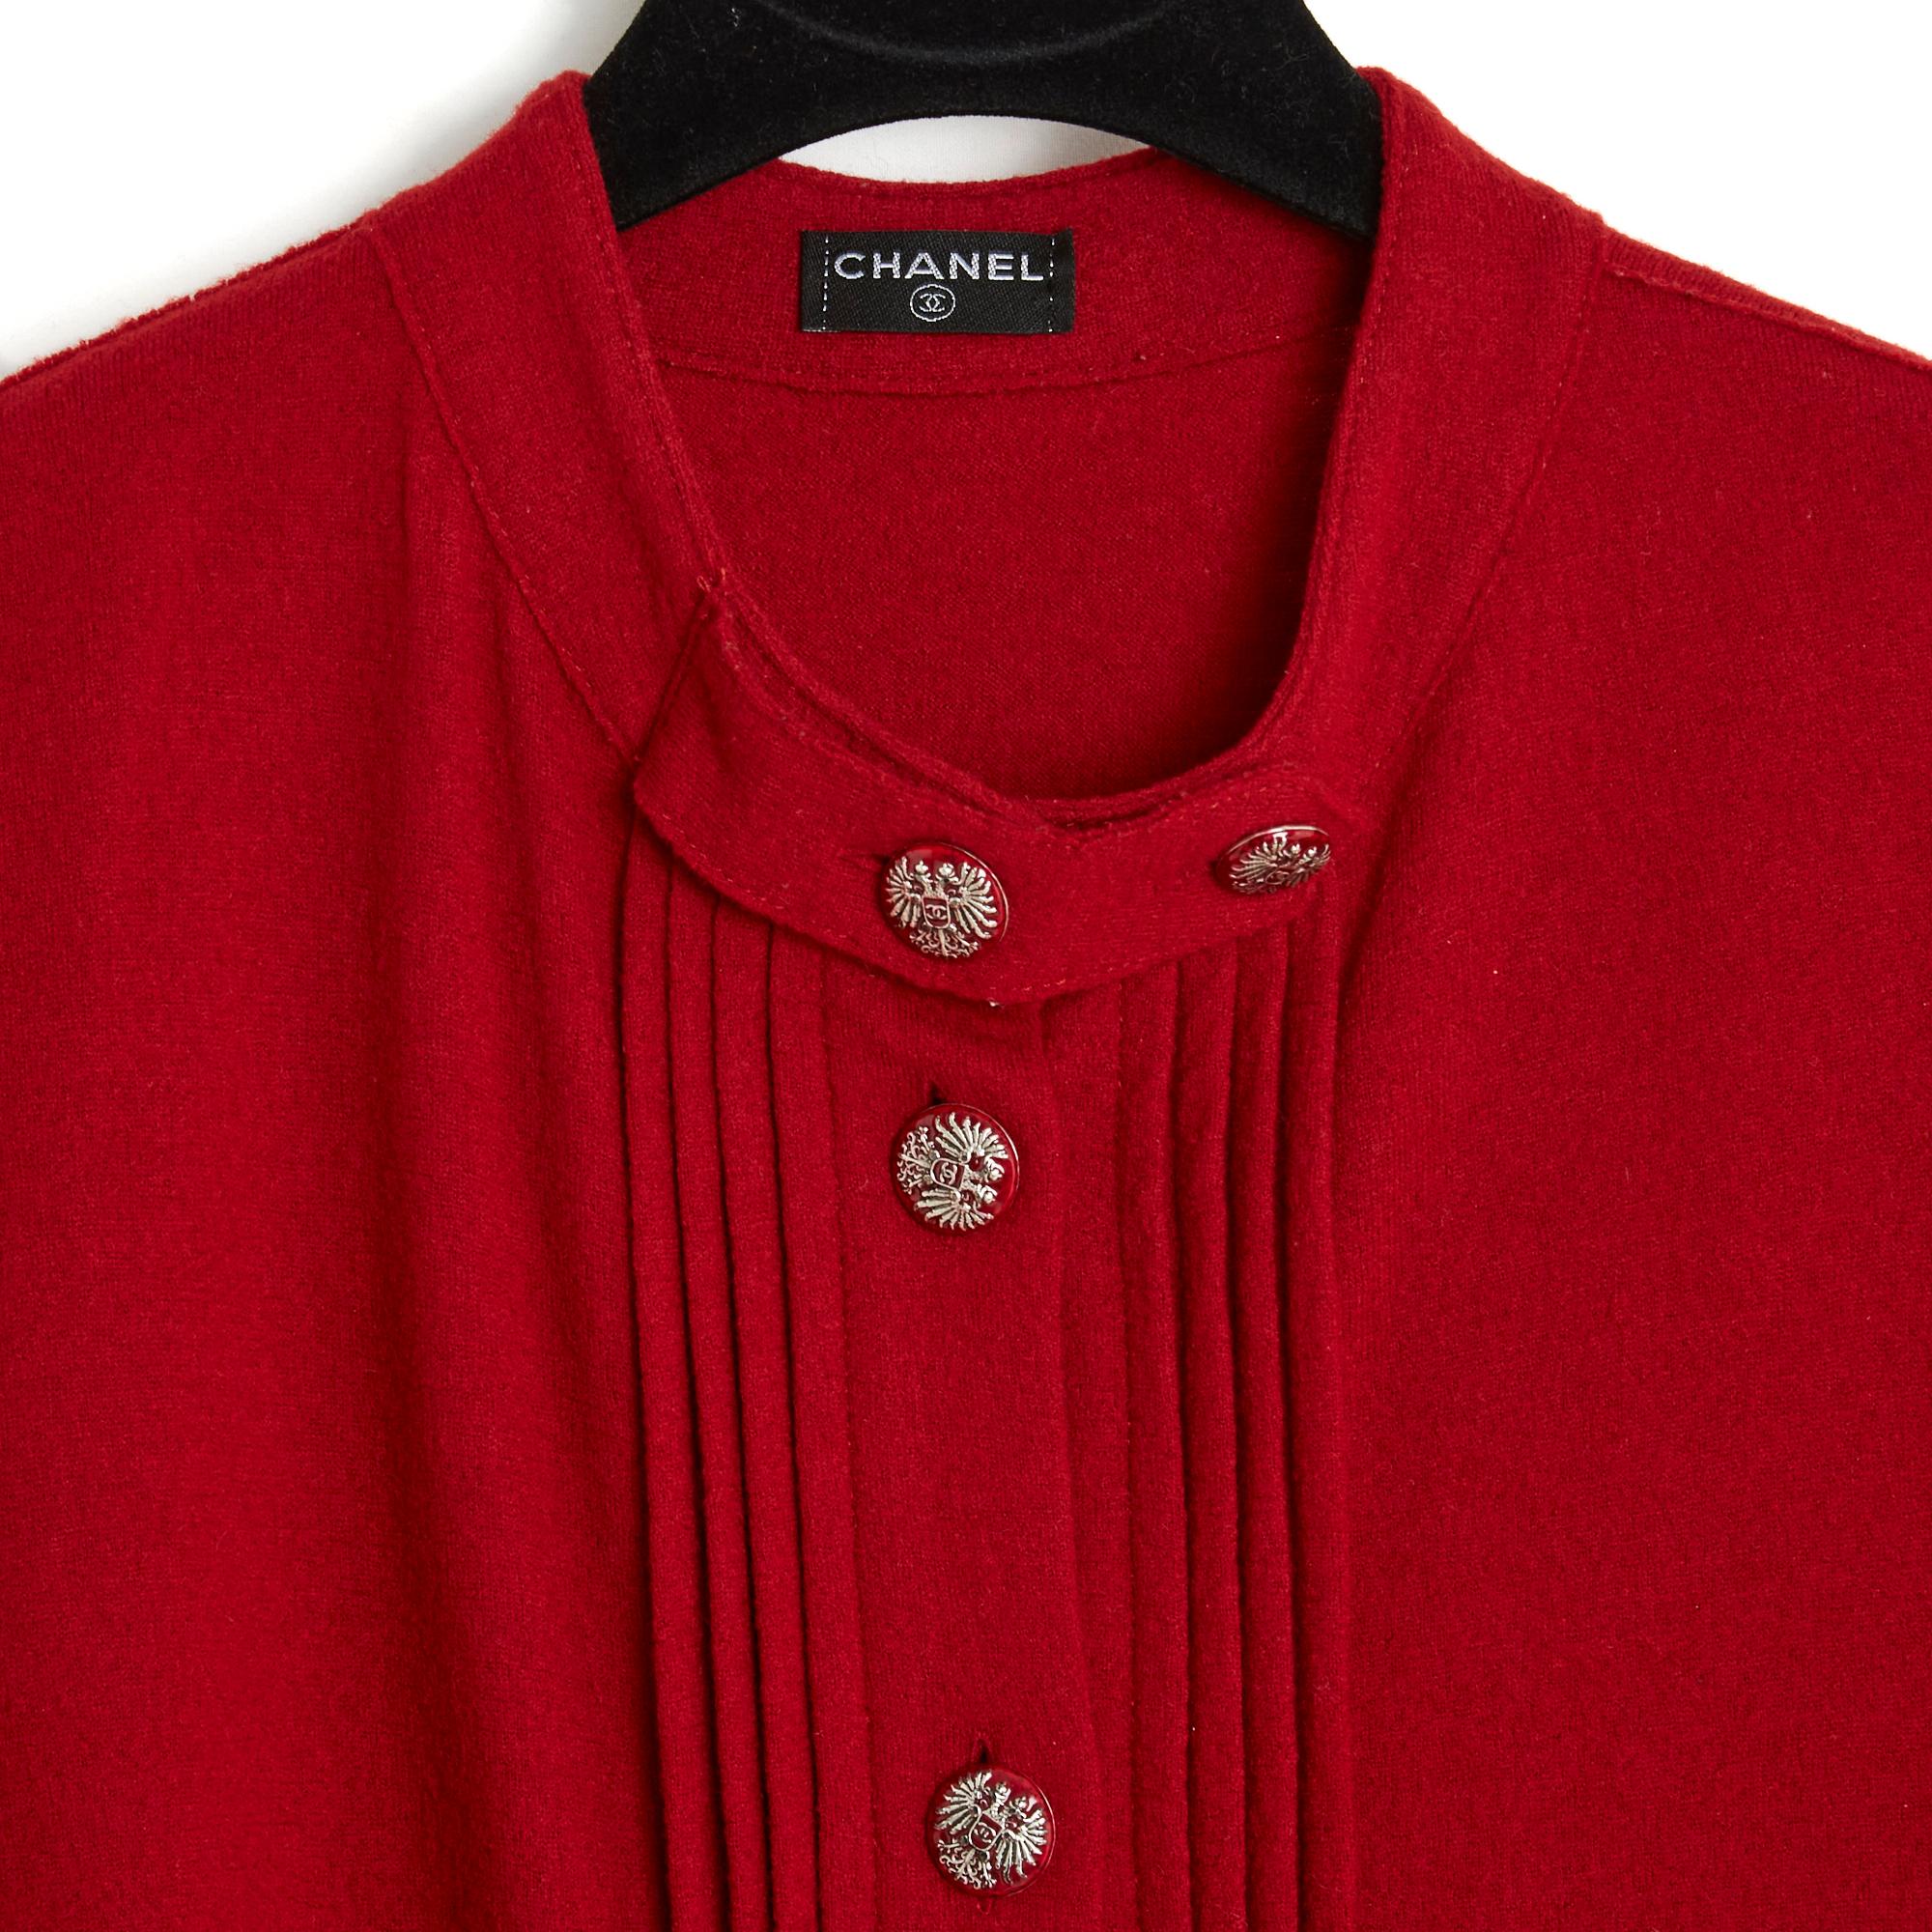 Women's or Men's Pre Fall 2015 Chanel Salzburg FR36/40 Red jersey mini dress tunique